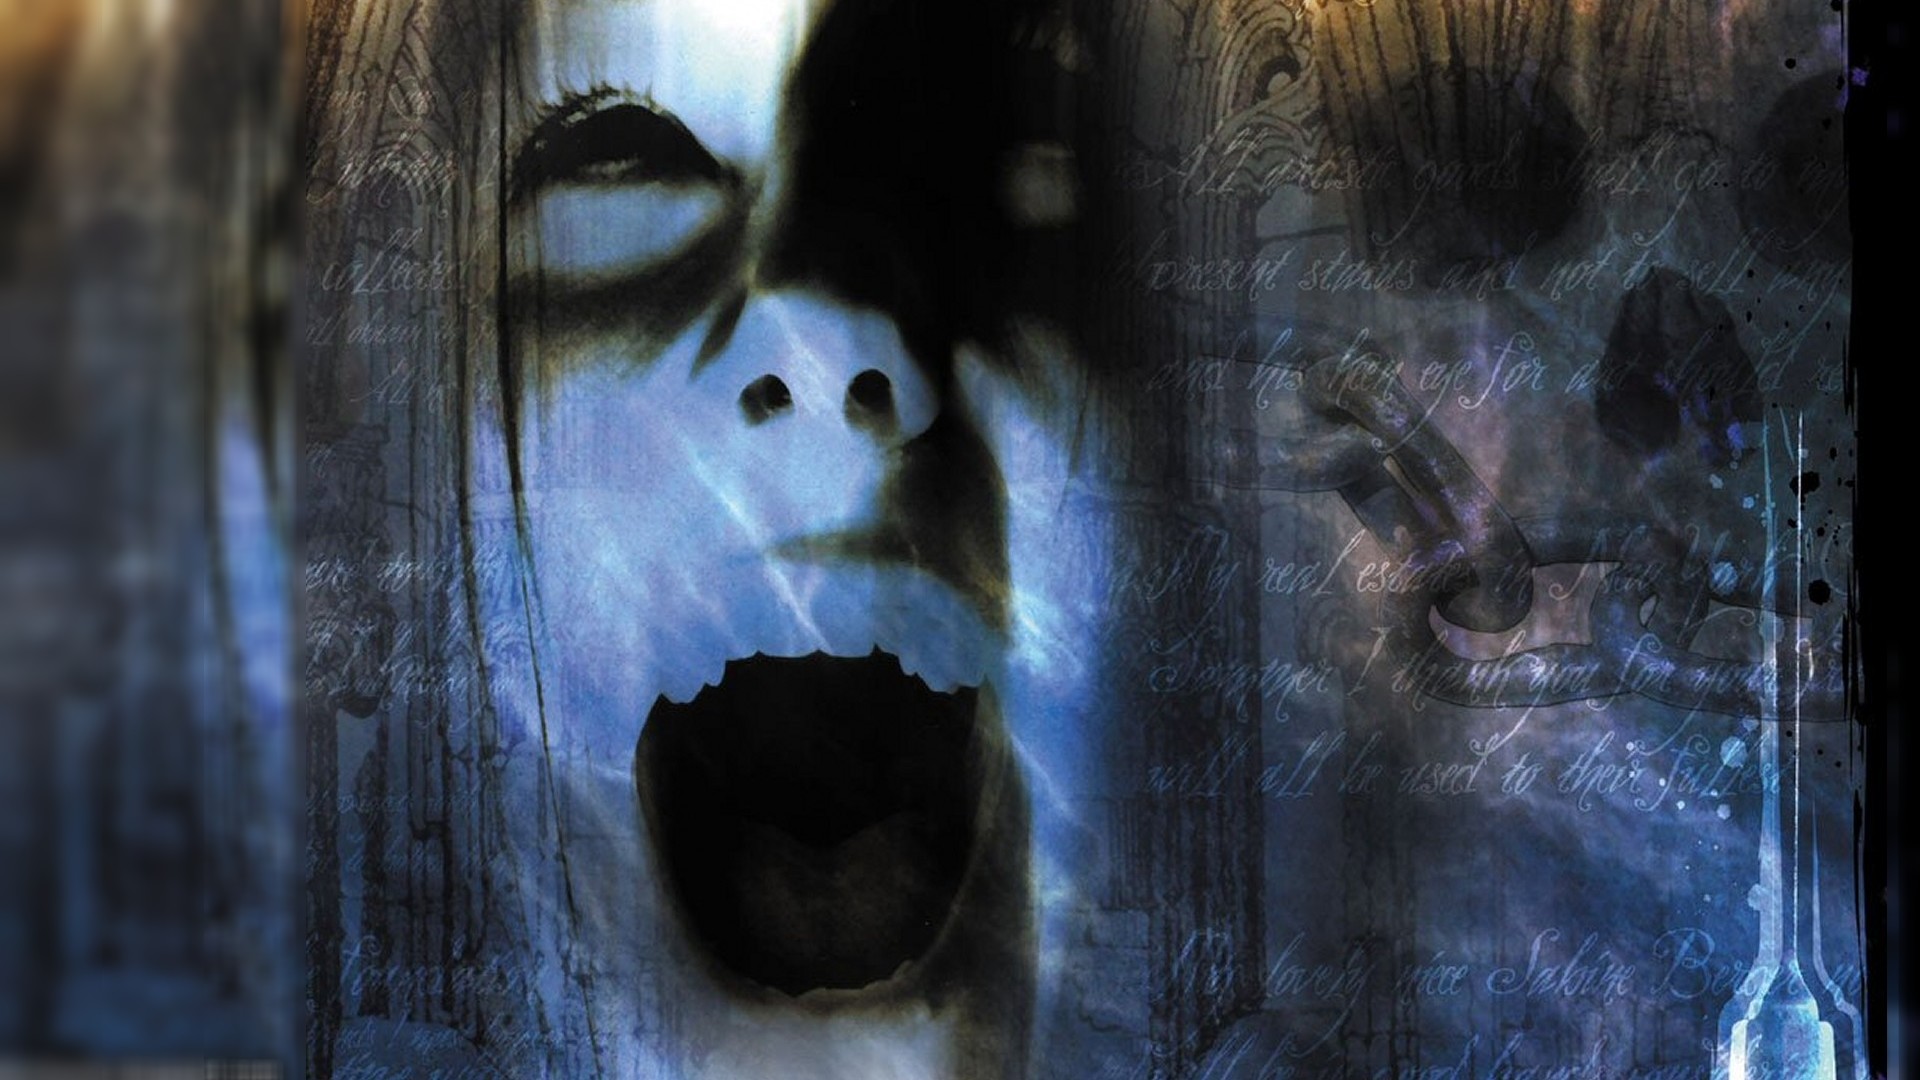 Scary Halloween Desktop Wallpaper